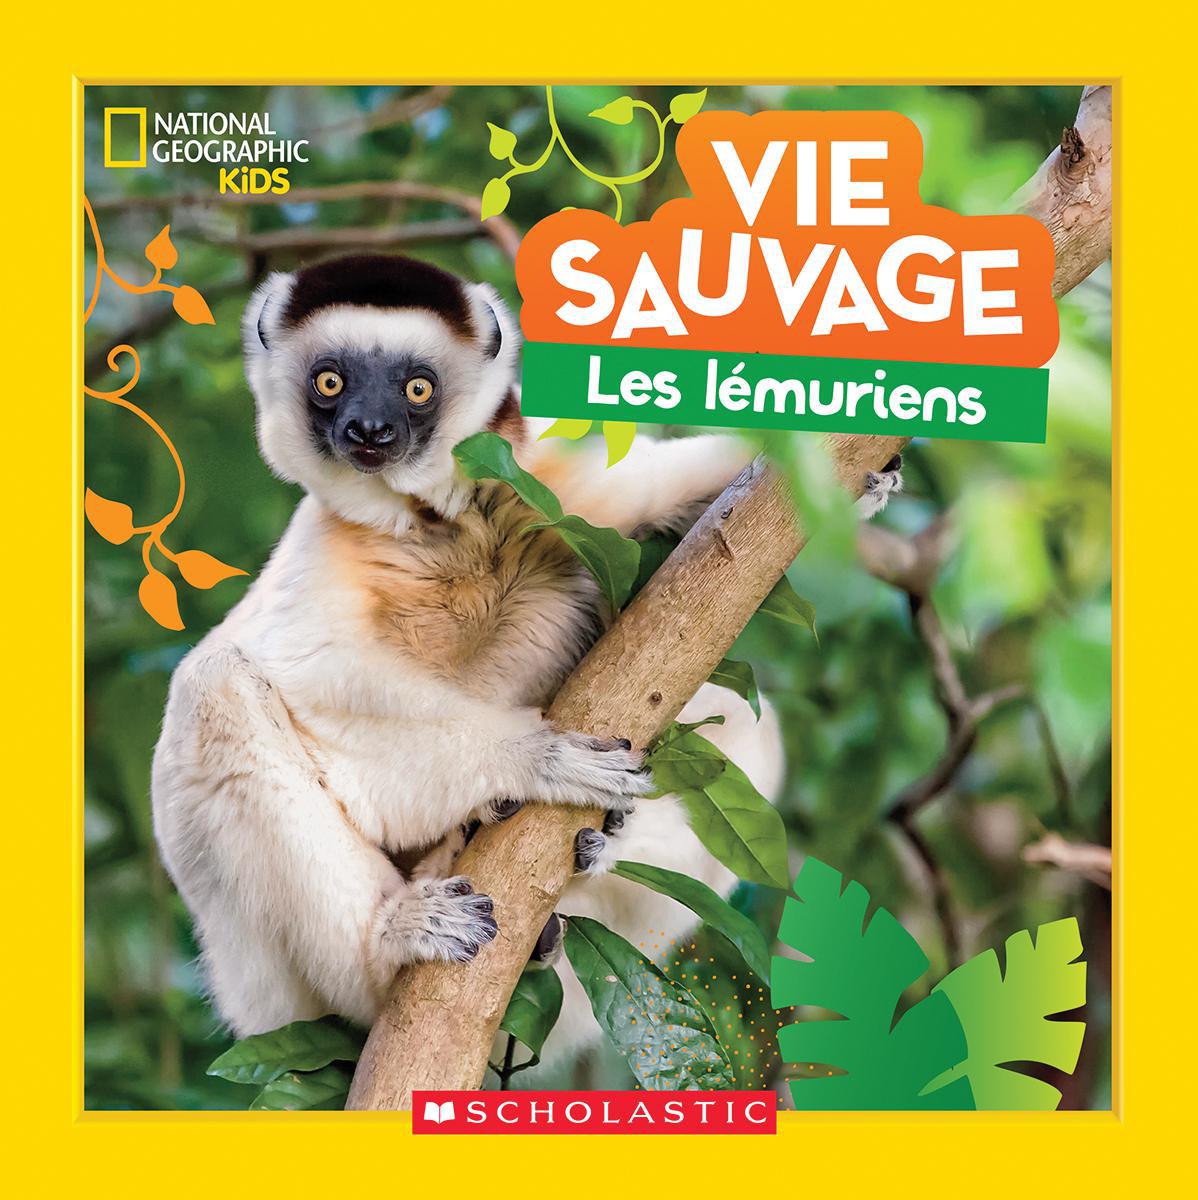  National Geographic Kids : Vie sauvage : Les lémuriens 